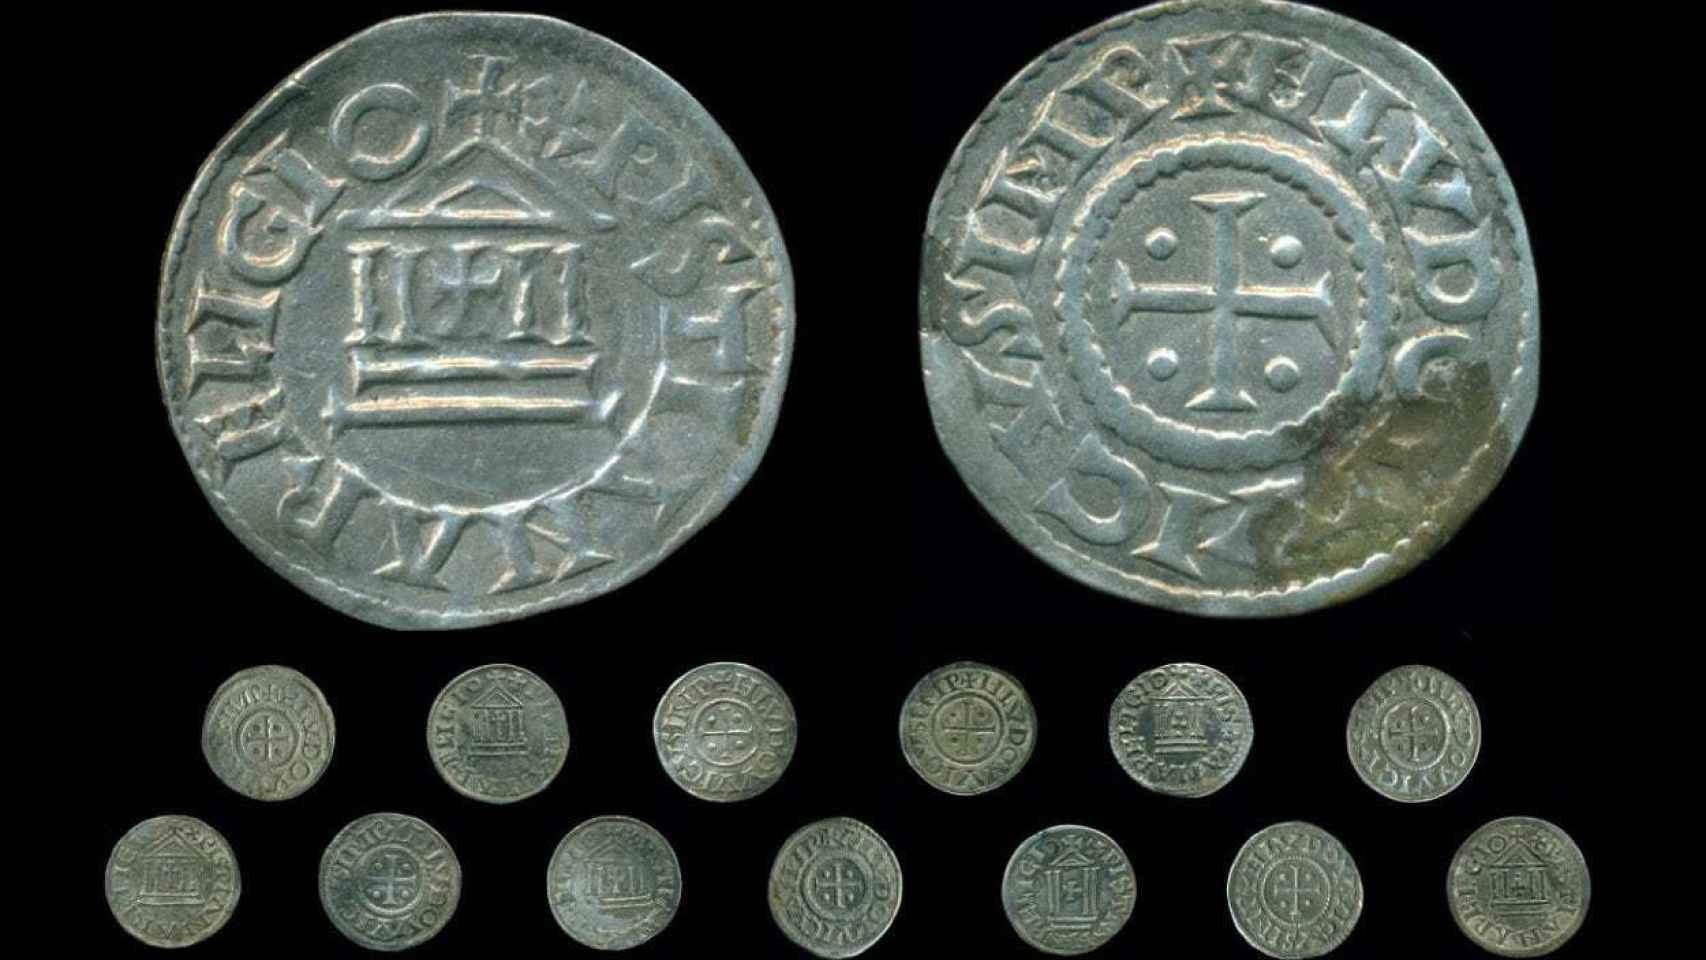 Descubierto un gran tesoro carolingio de 118 monedas de plata en Polonia